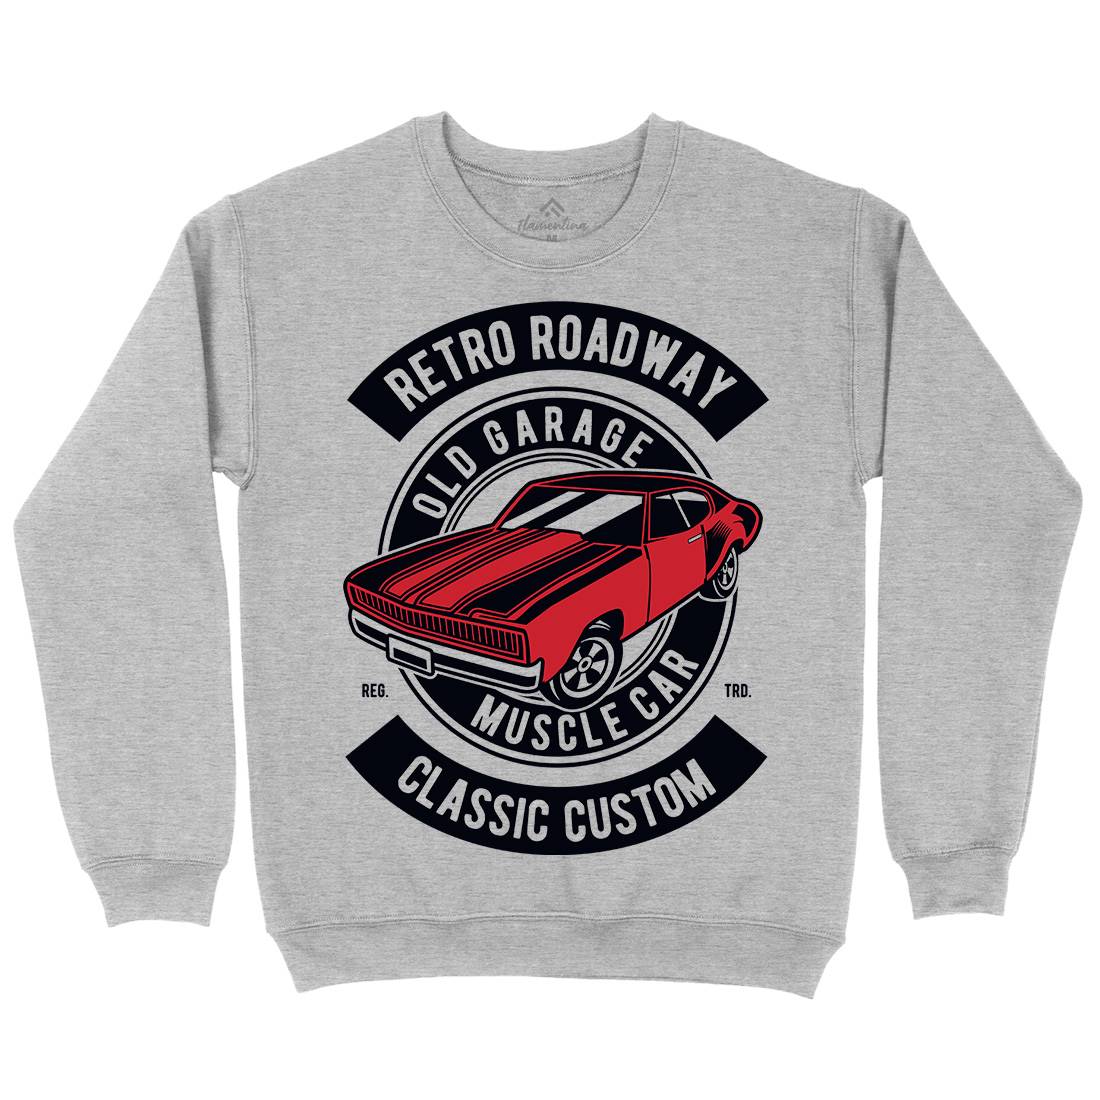 Retro Roadway Kids Crew Neck Sweatshirt Cars D568